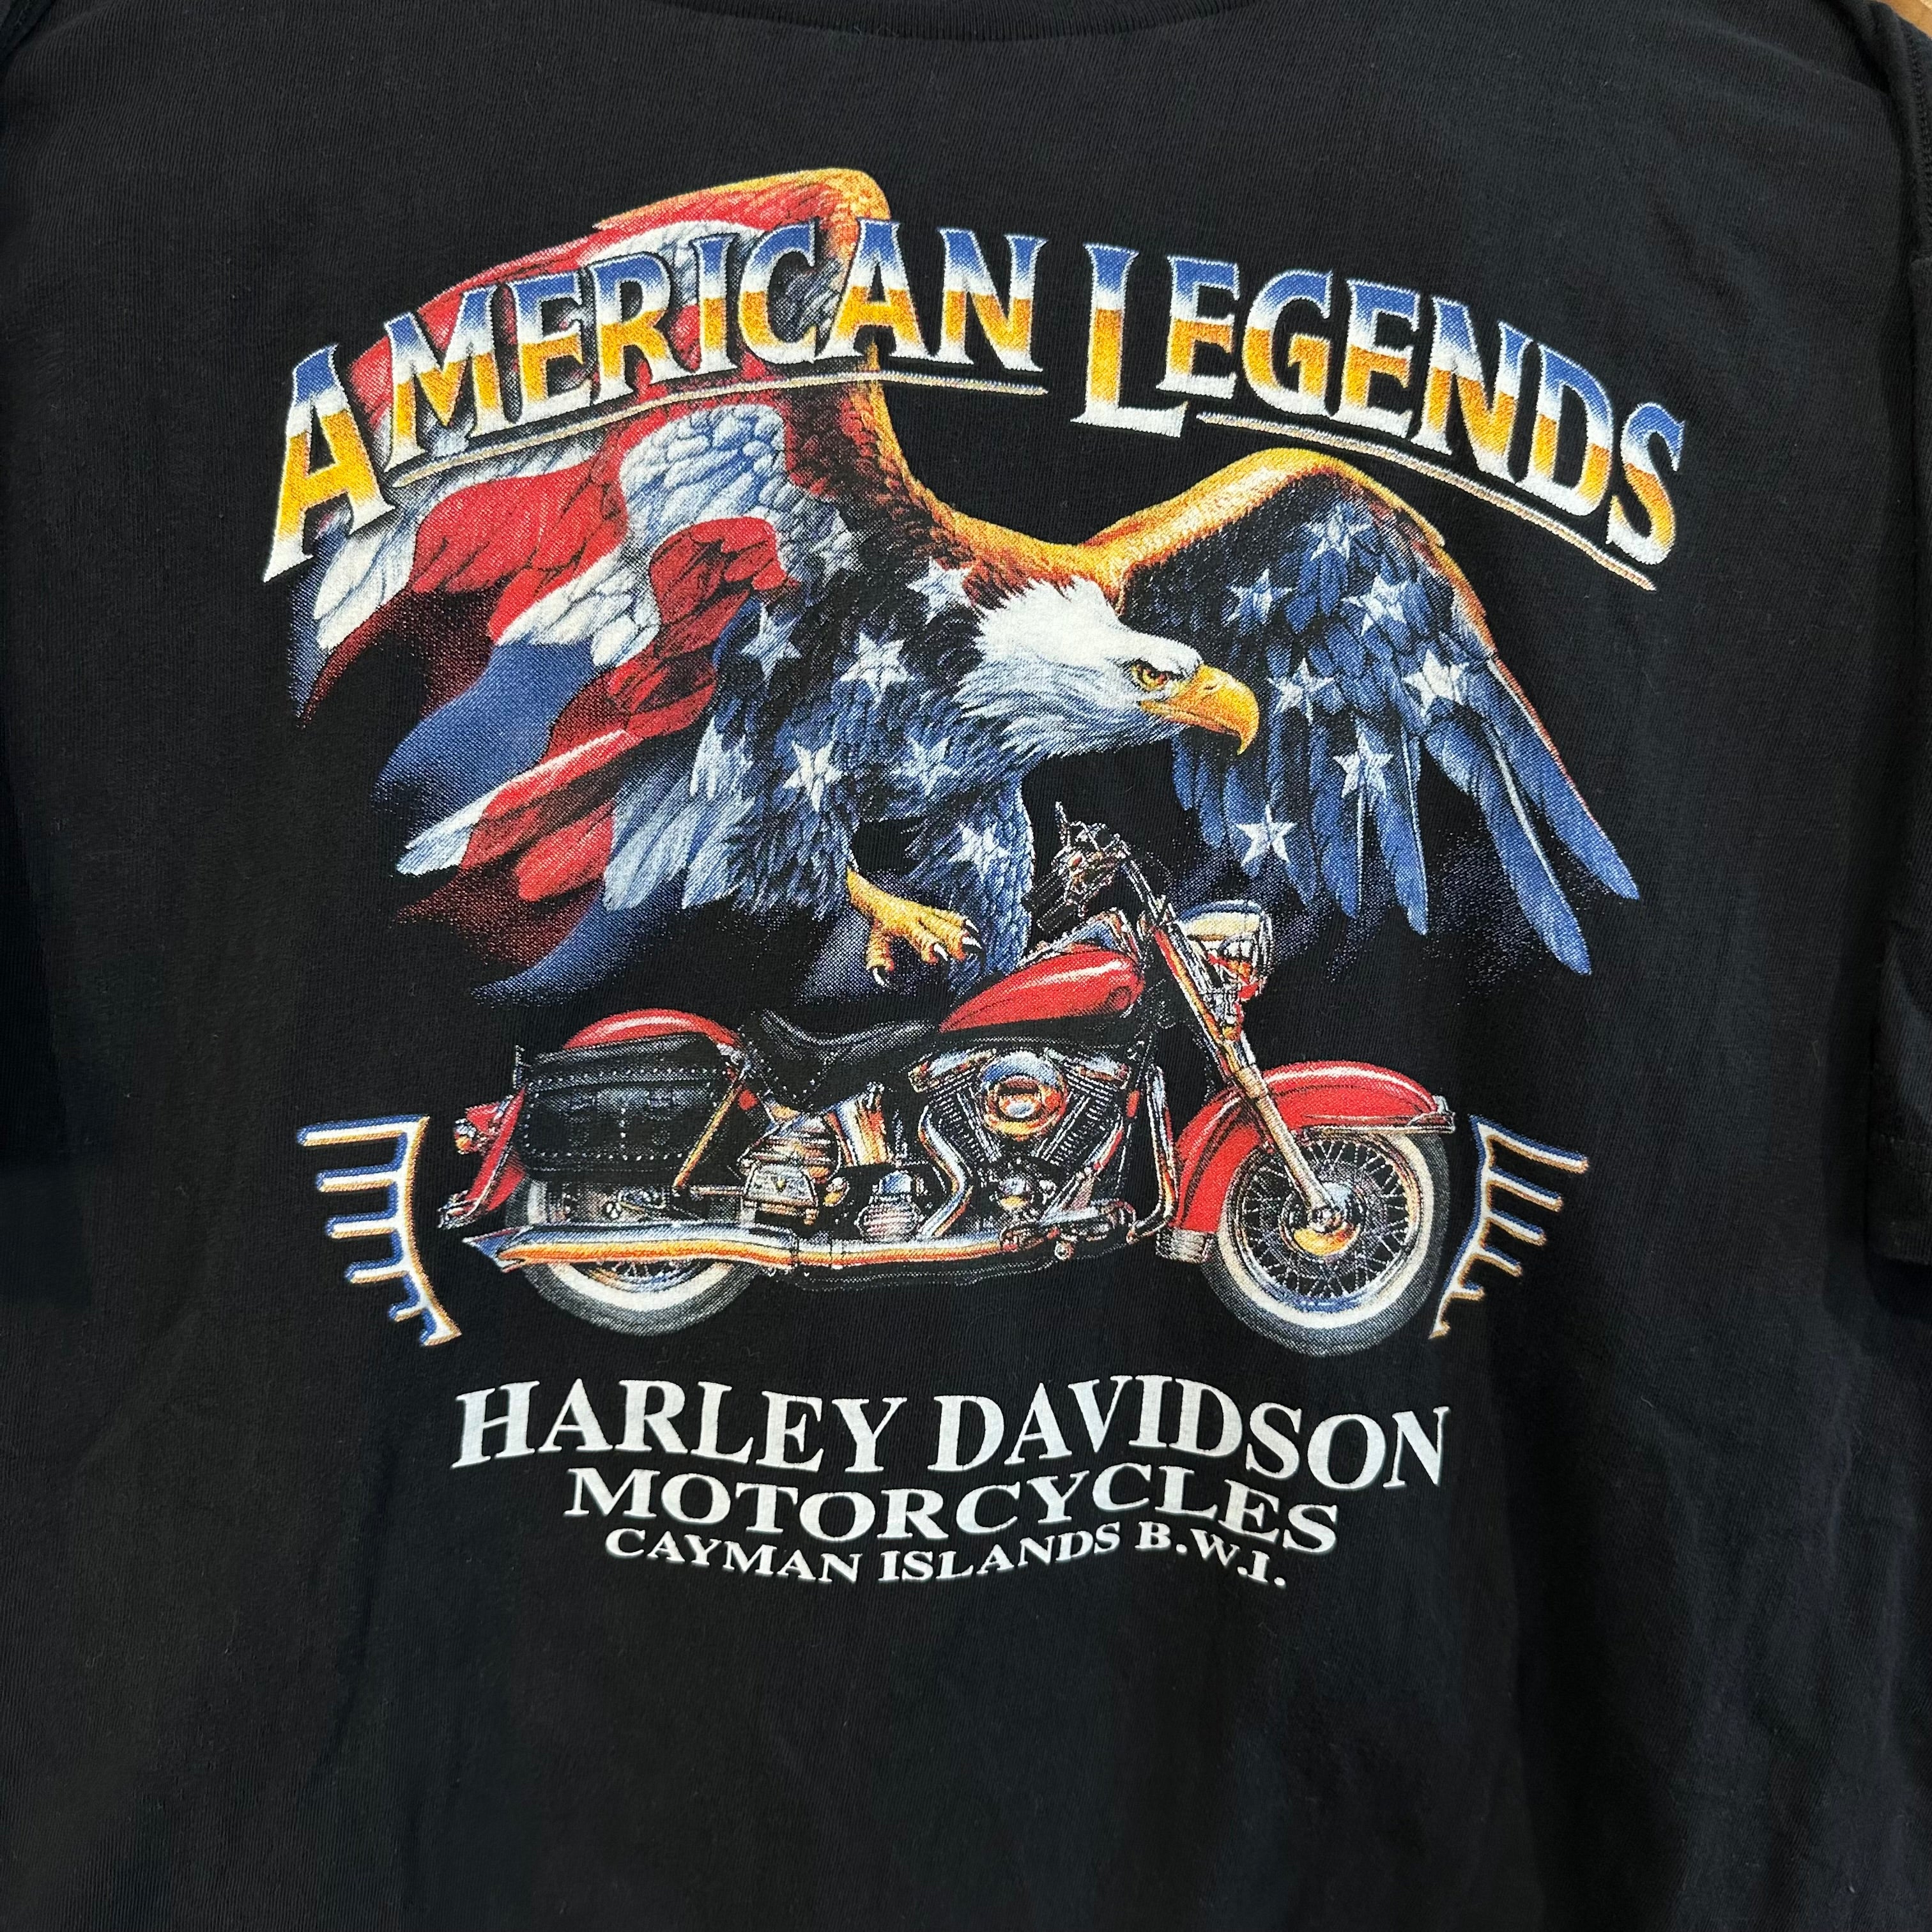 Harley Davidson American Legends Cayman Islands T-Shirt